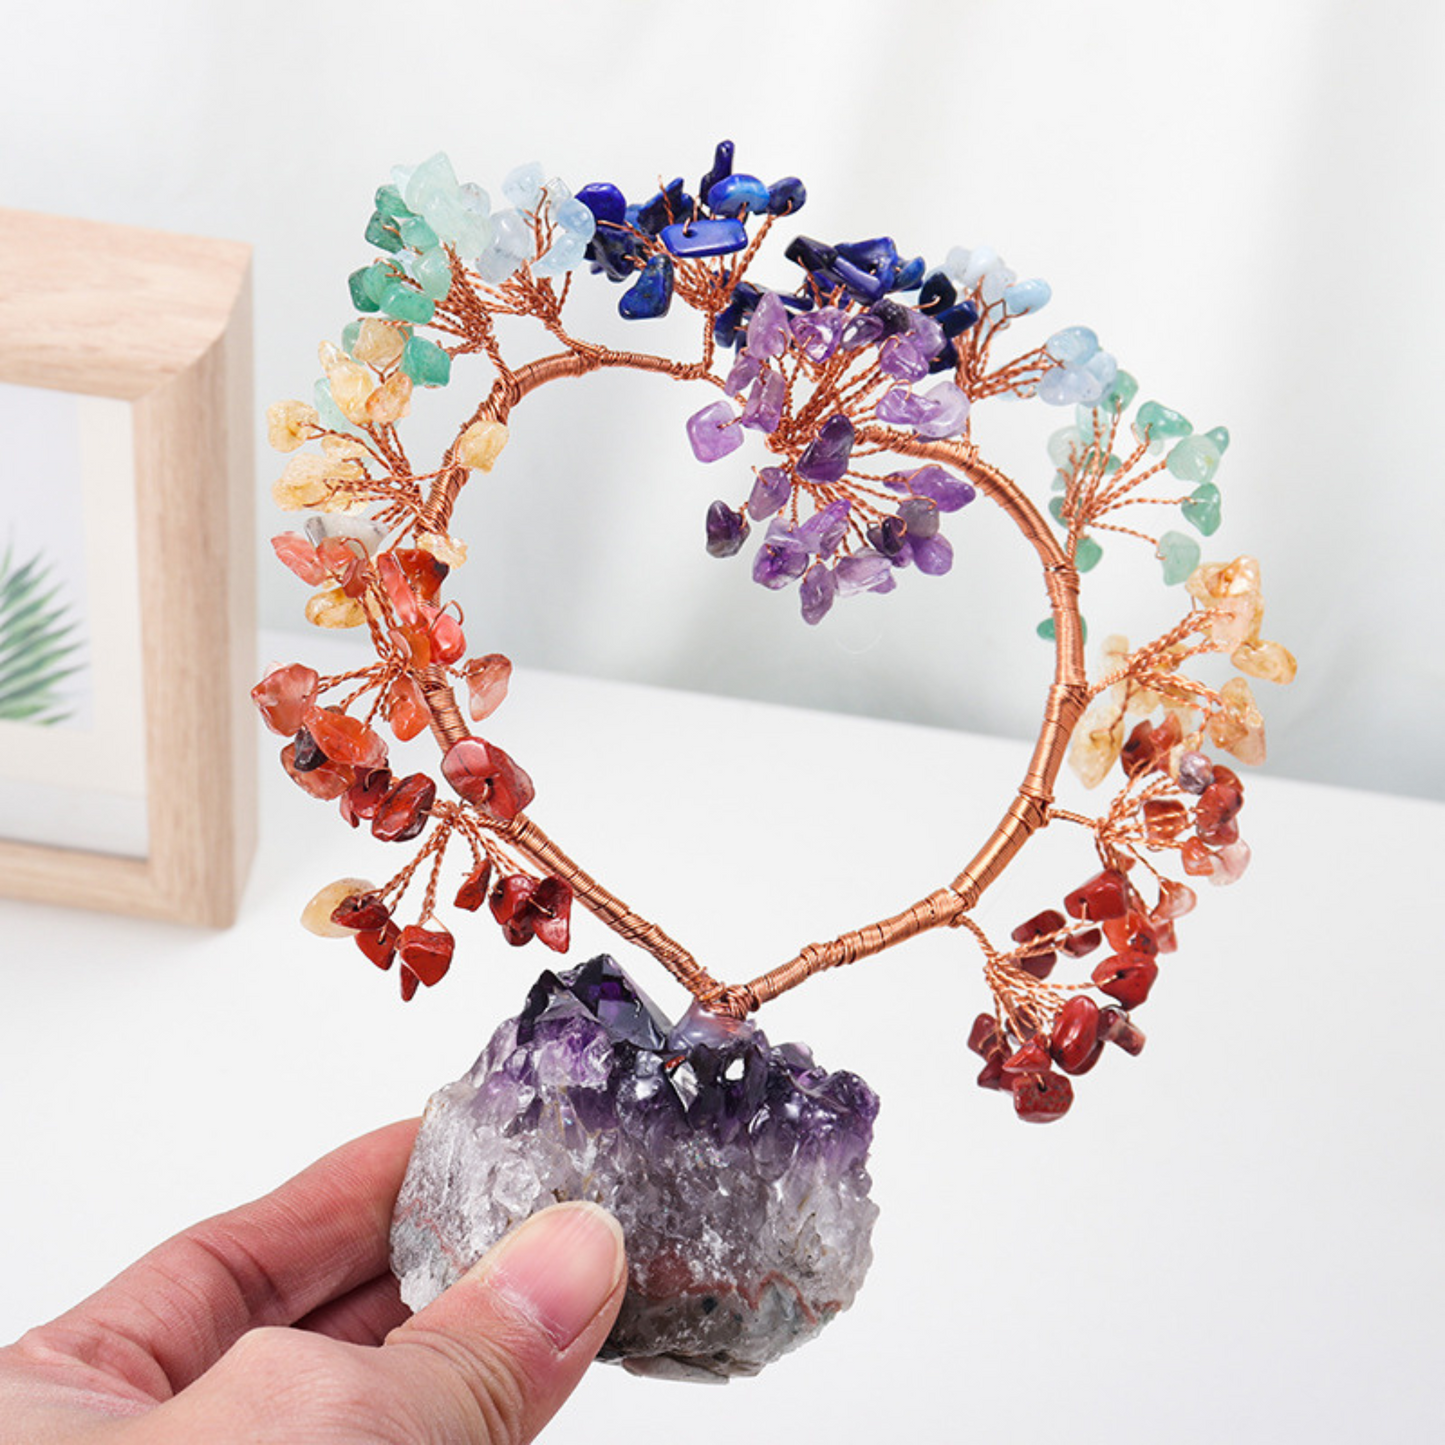 Handmade Colorful Heart Shaped Crystal Display Room Decor